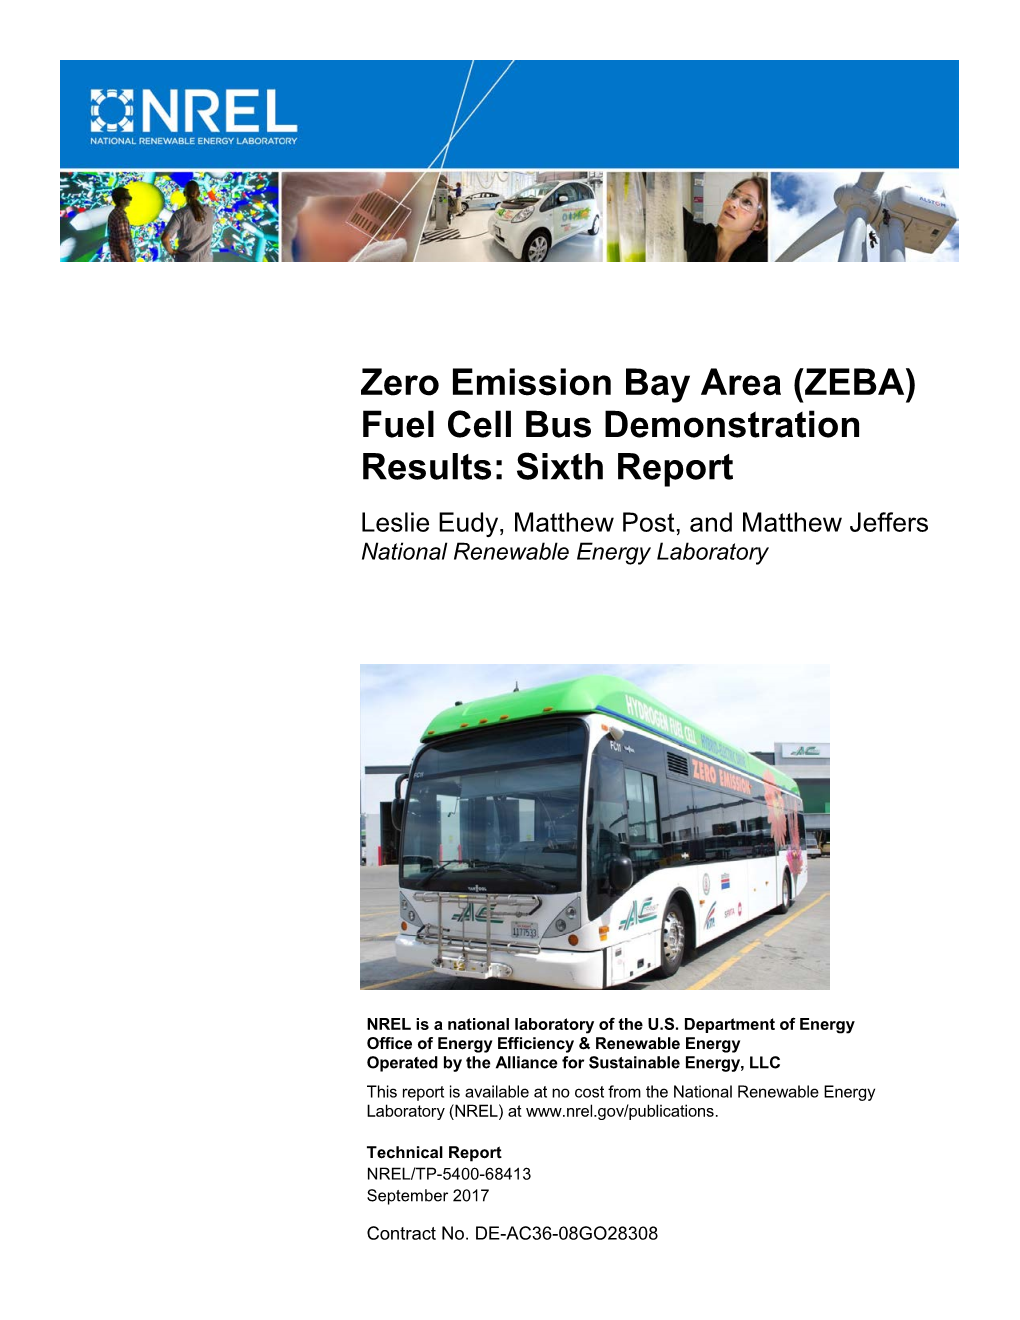 Zero Emission Bay Area (ZEBA) Fuel Cell Bus Demonstration Results: Sixth Report Leslie Eudy, Matthew Post, and Matthew Jeffers National Renewable Energy Laboratory